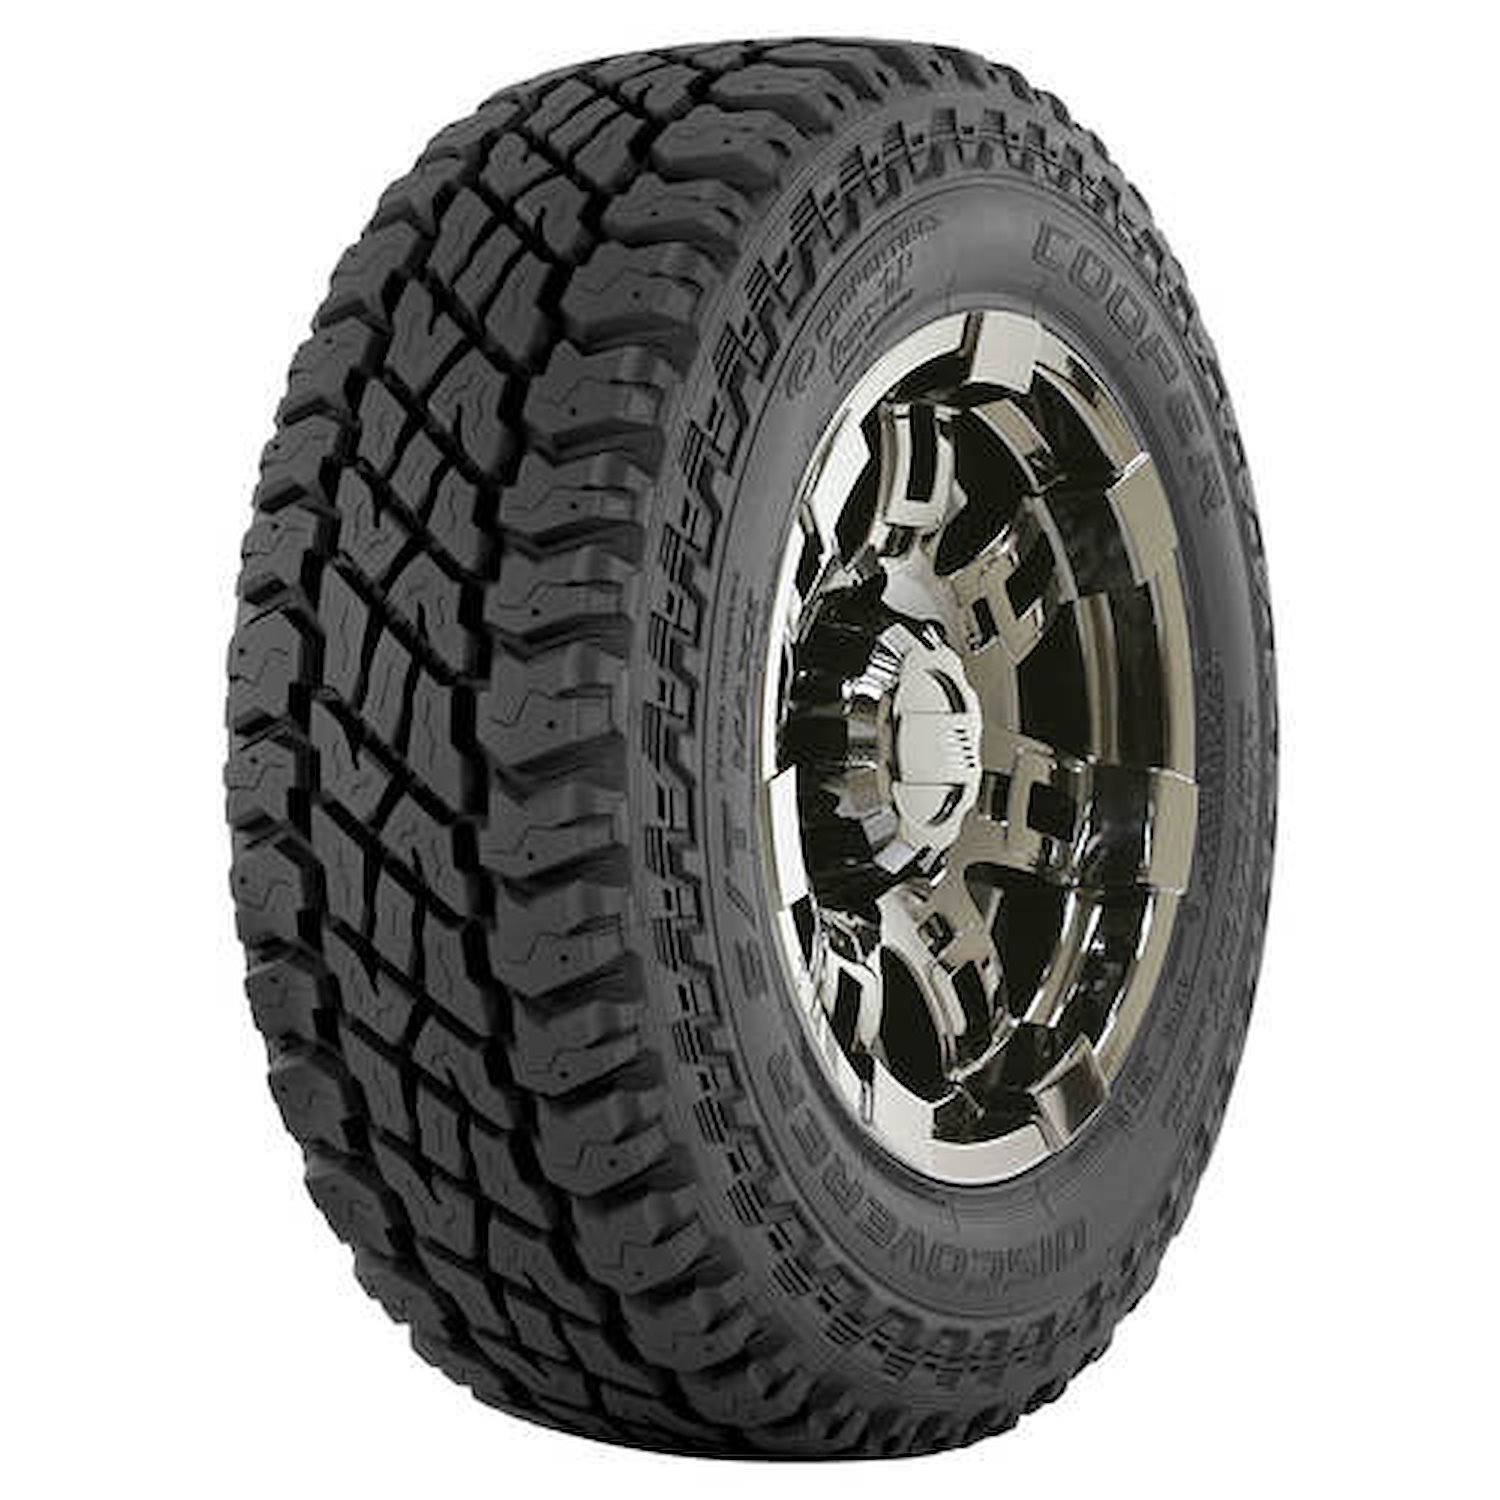 Discoverer S/T Maxx All-Terrain Tire, LT265/65R17